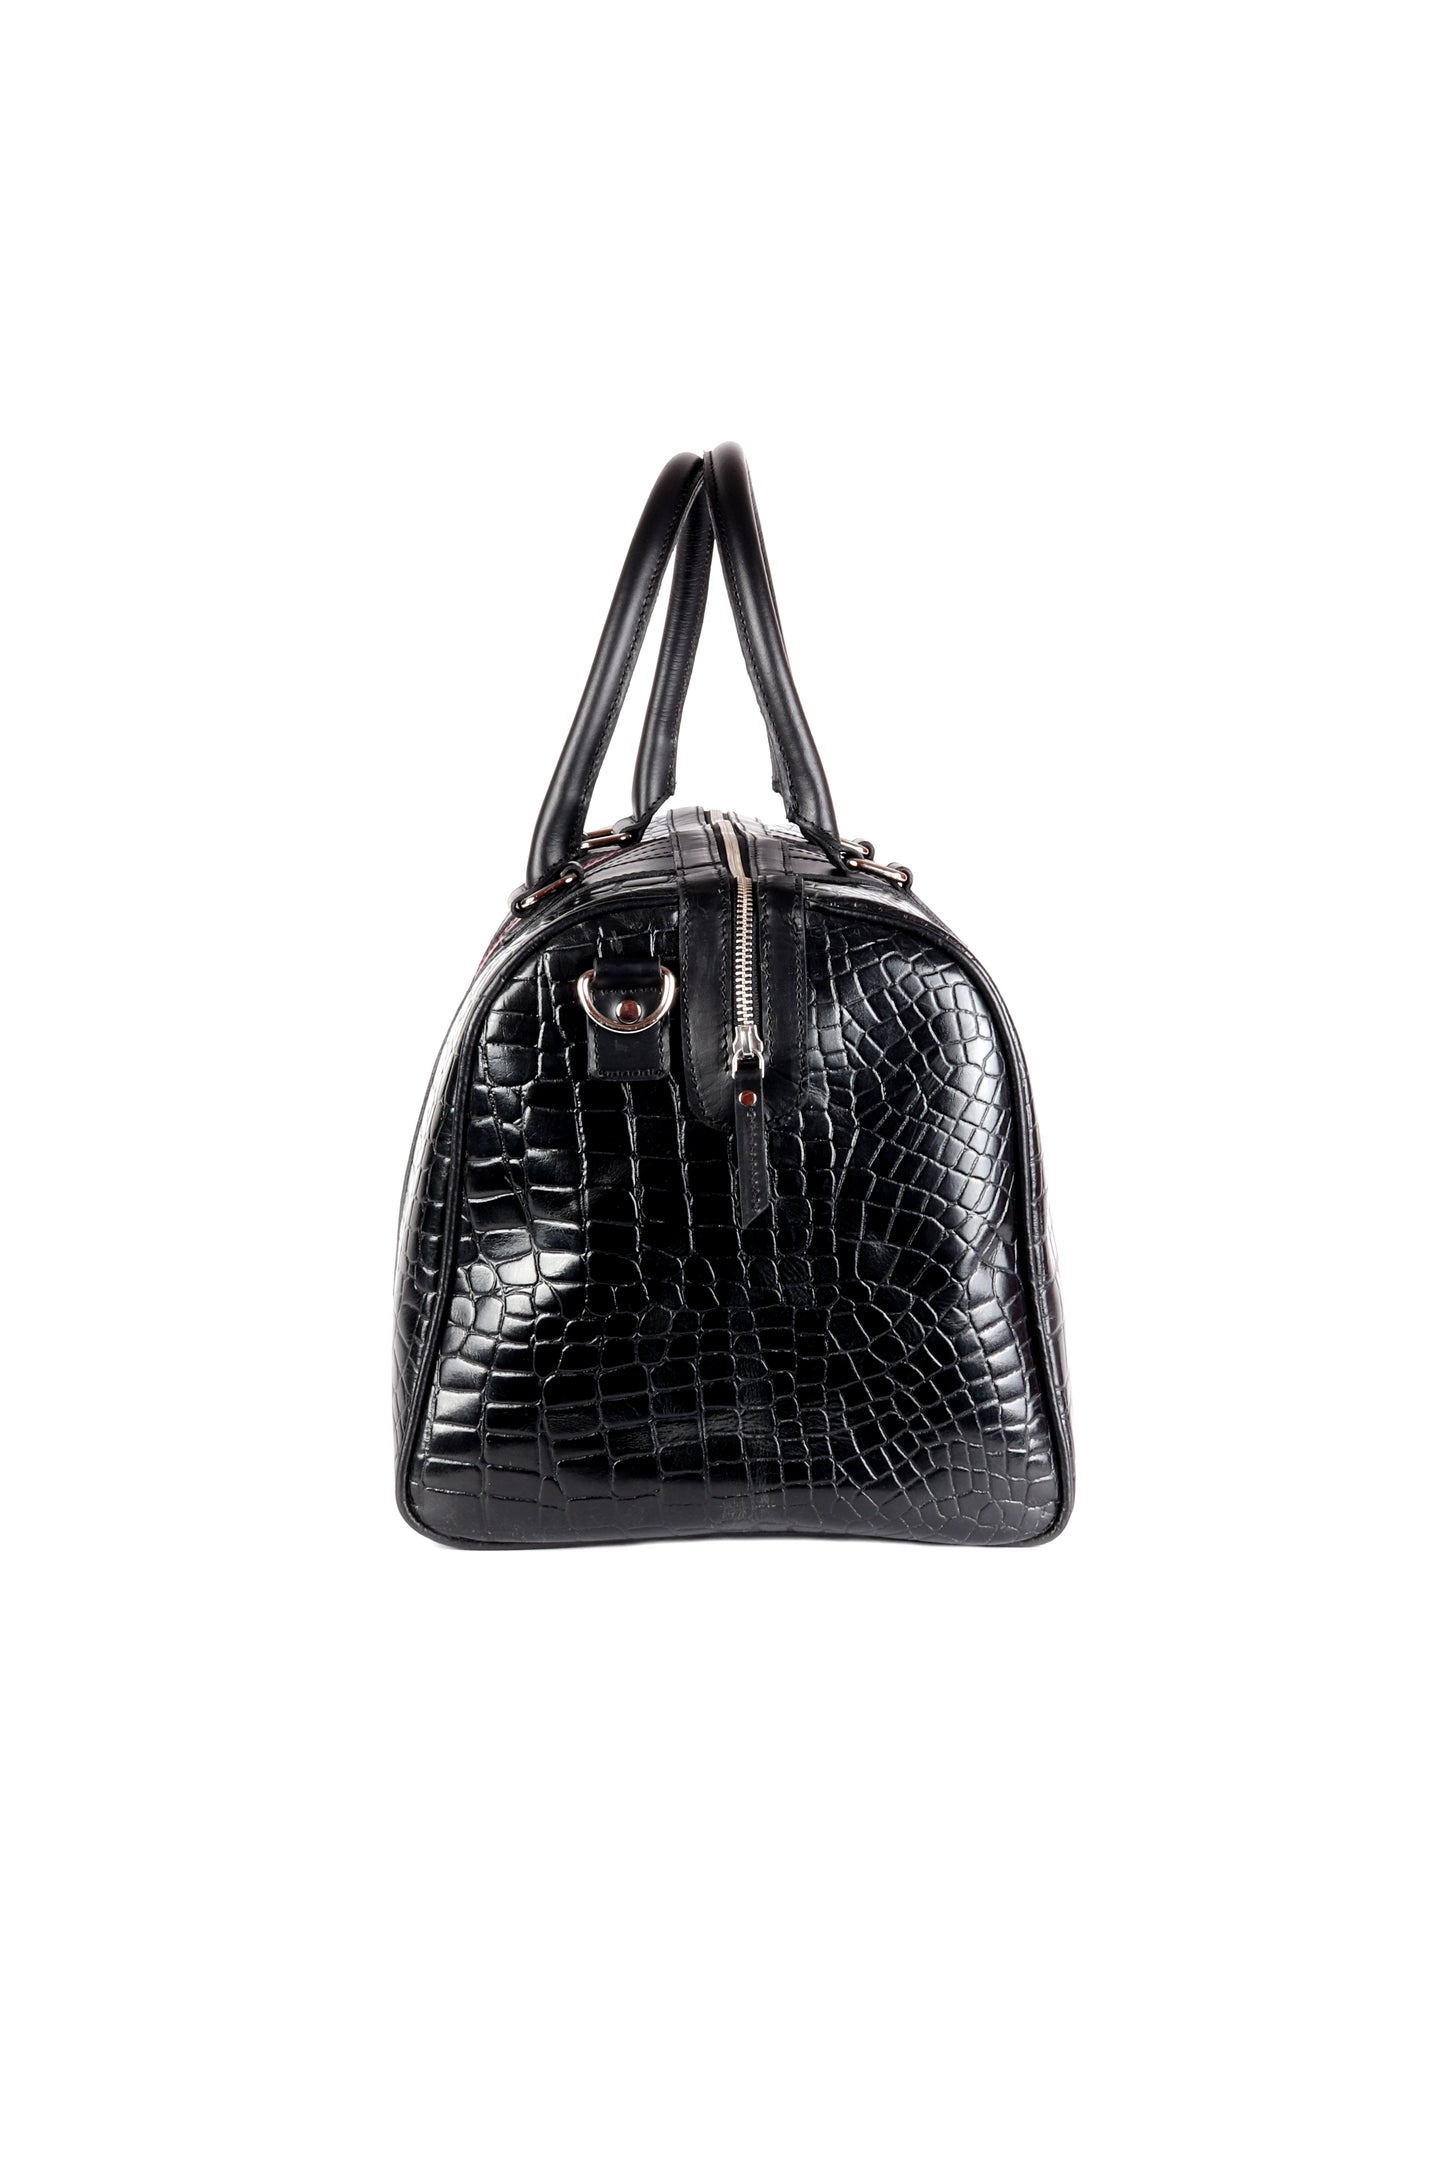 CrocoJet Black Duffle Bag